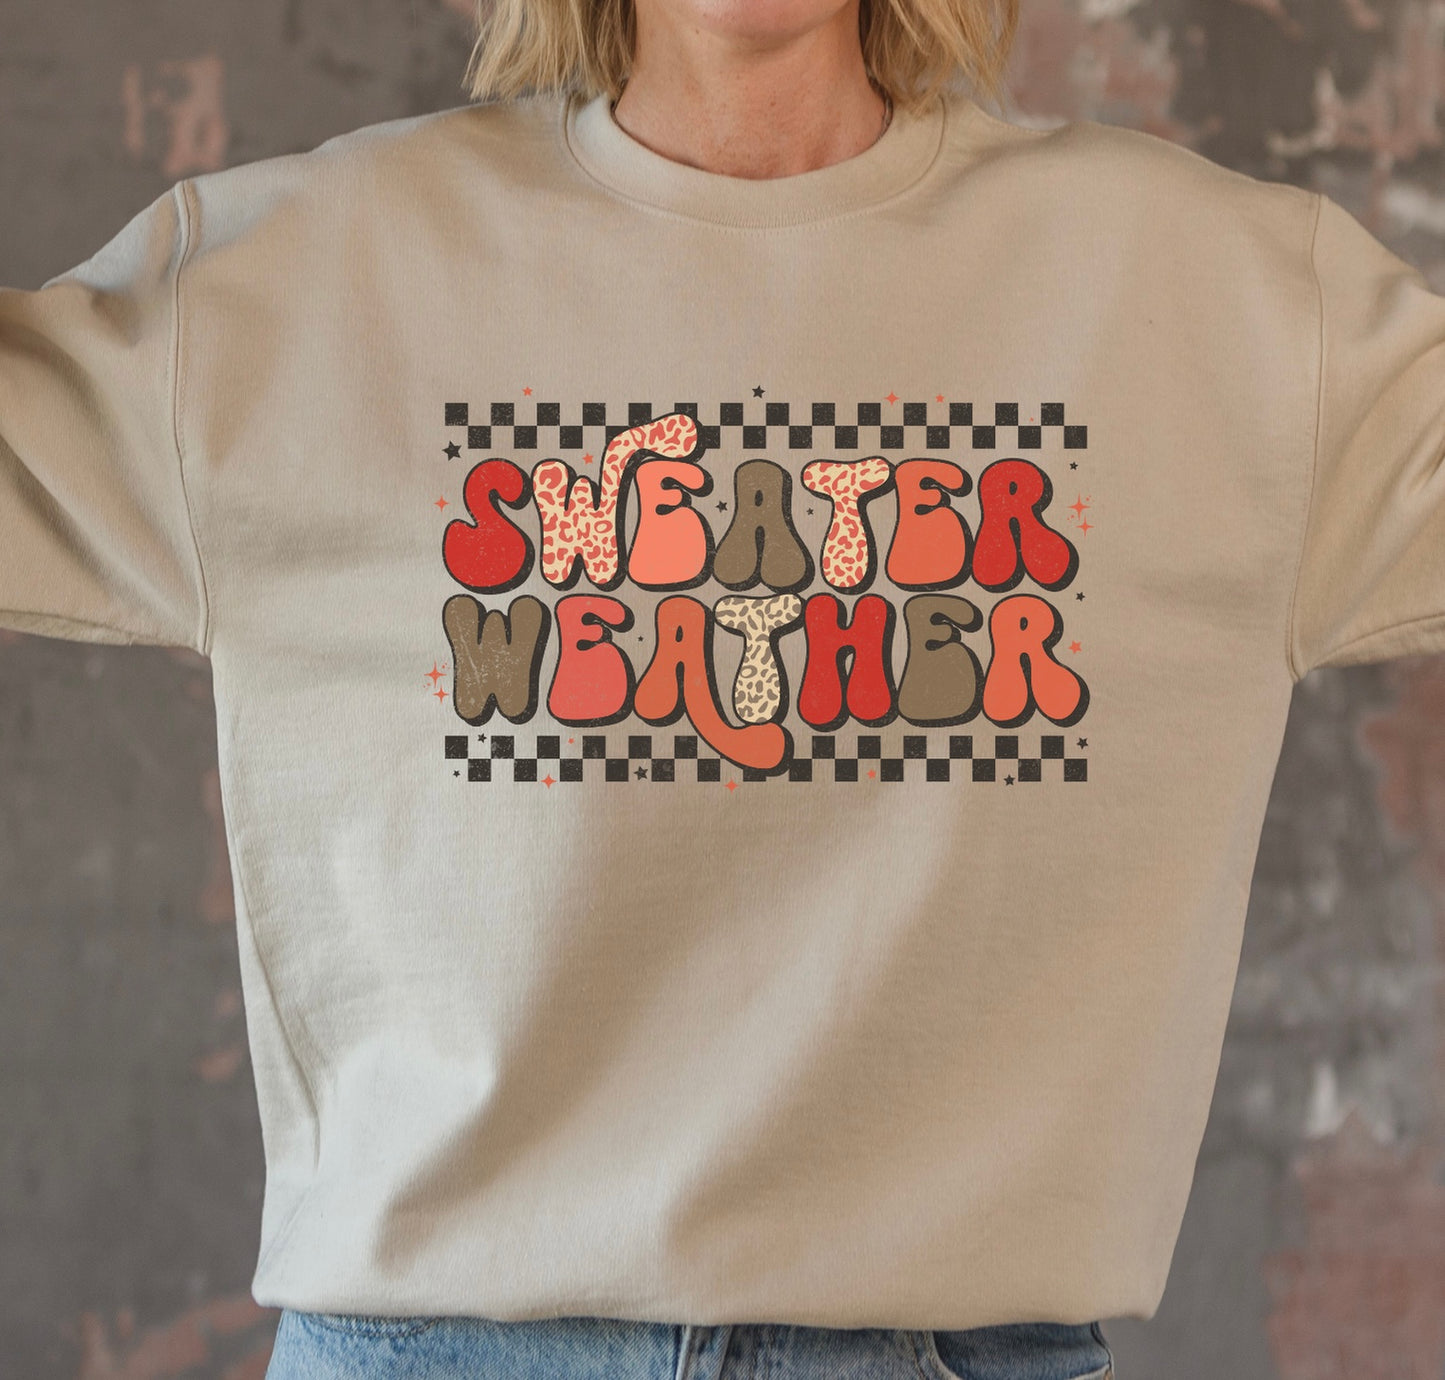 Sweater Weather - Cozy Adult Crewneck